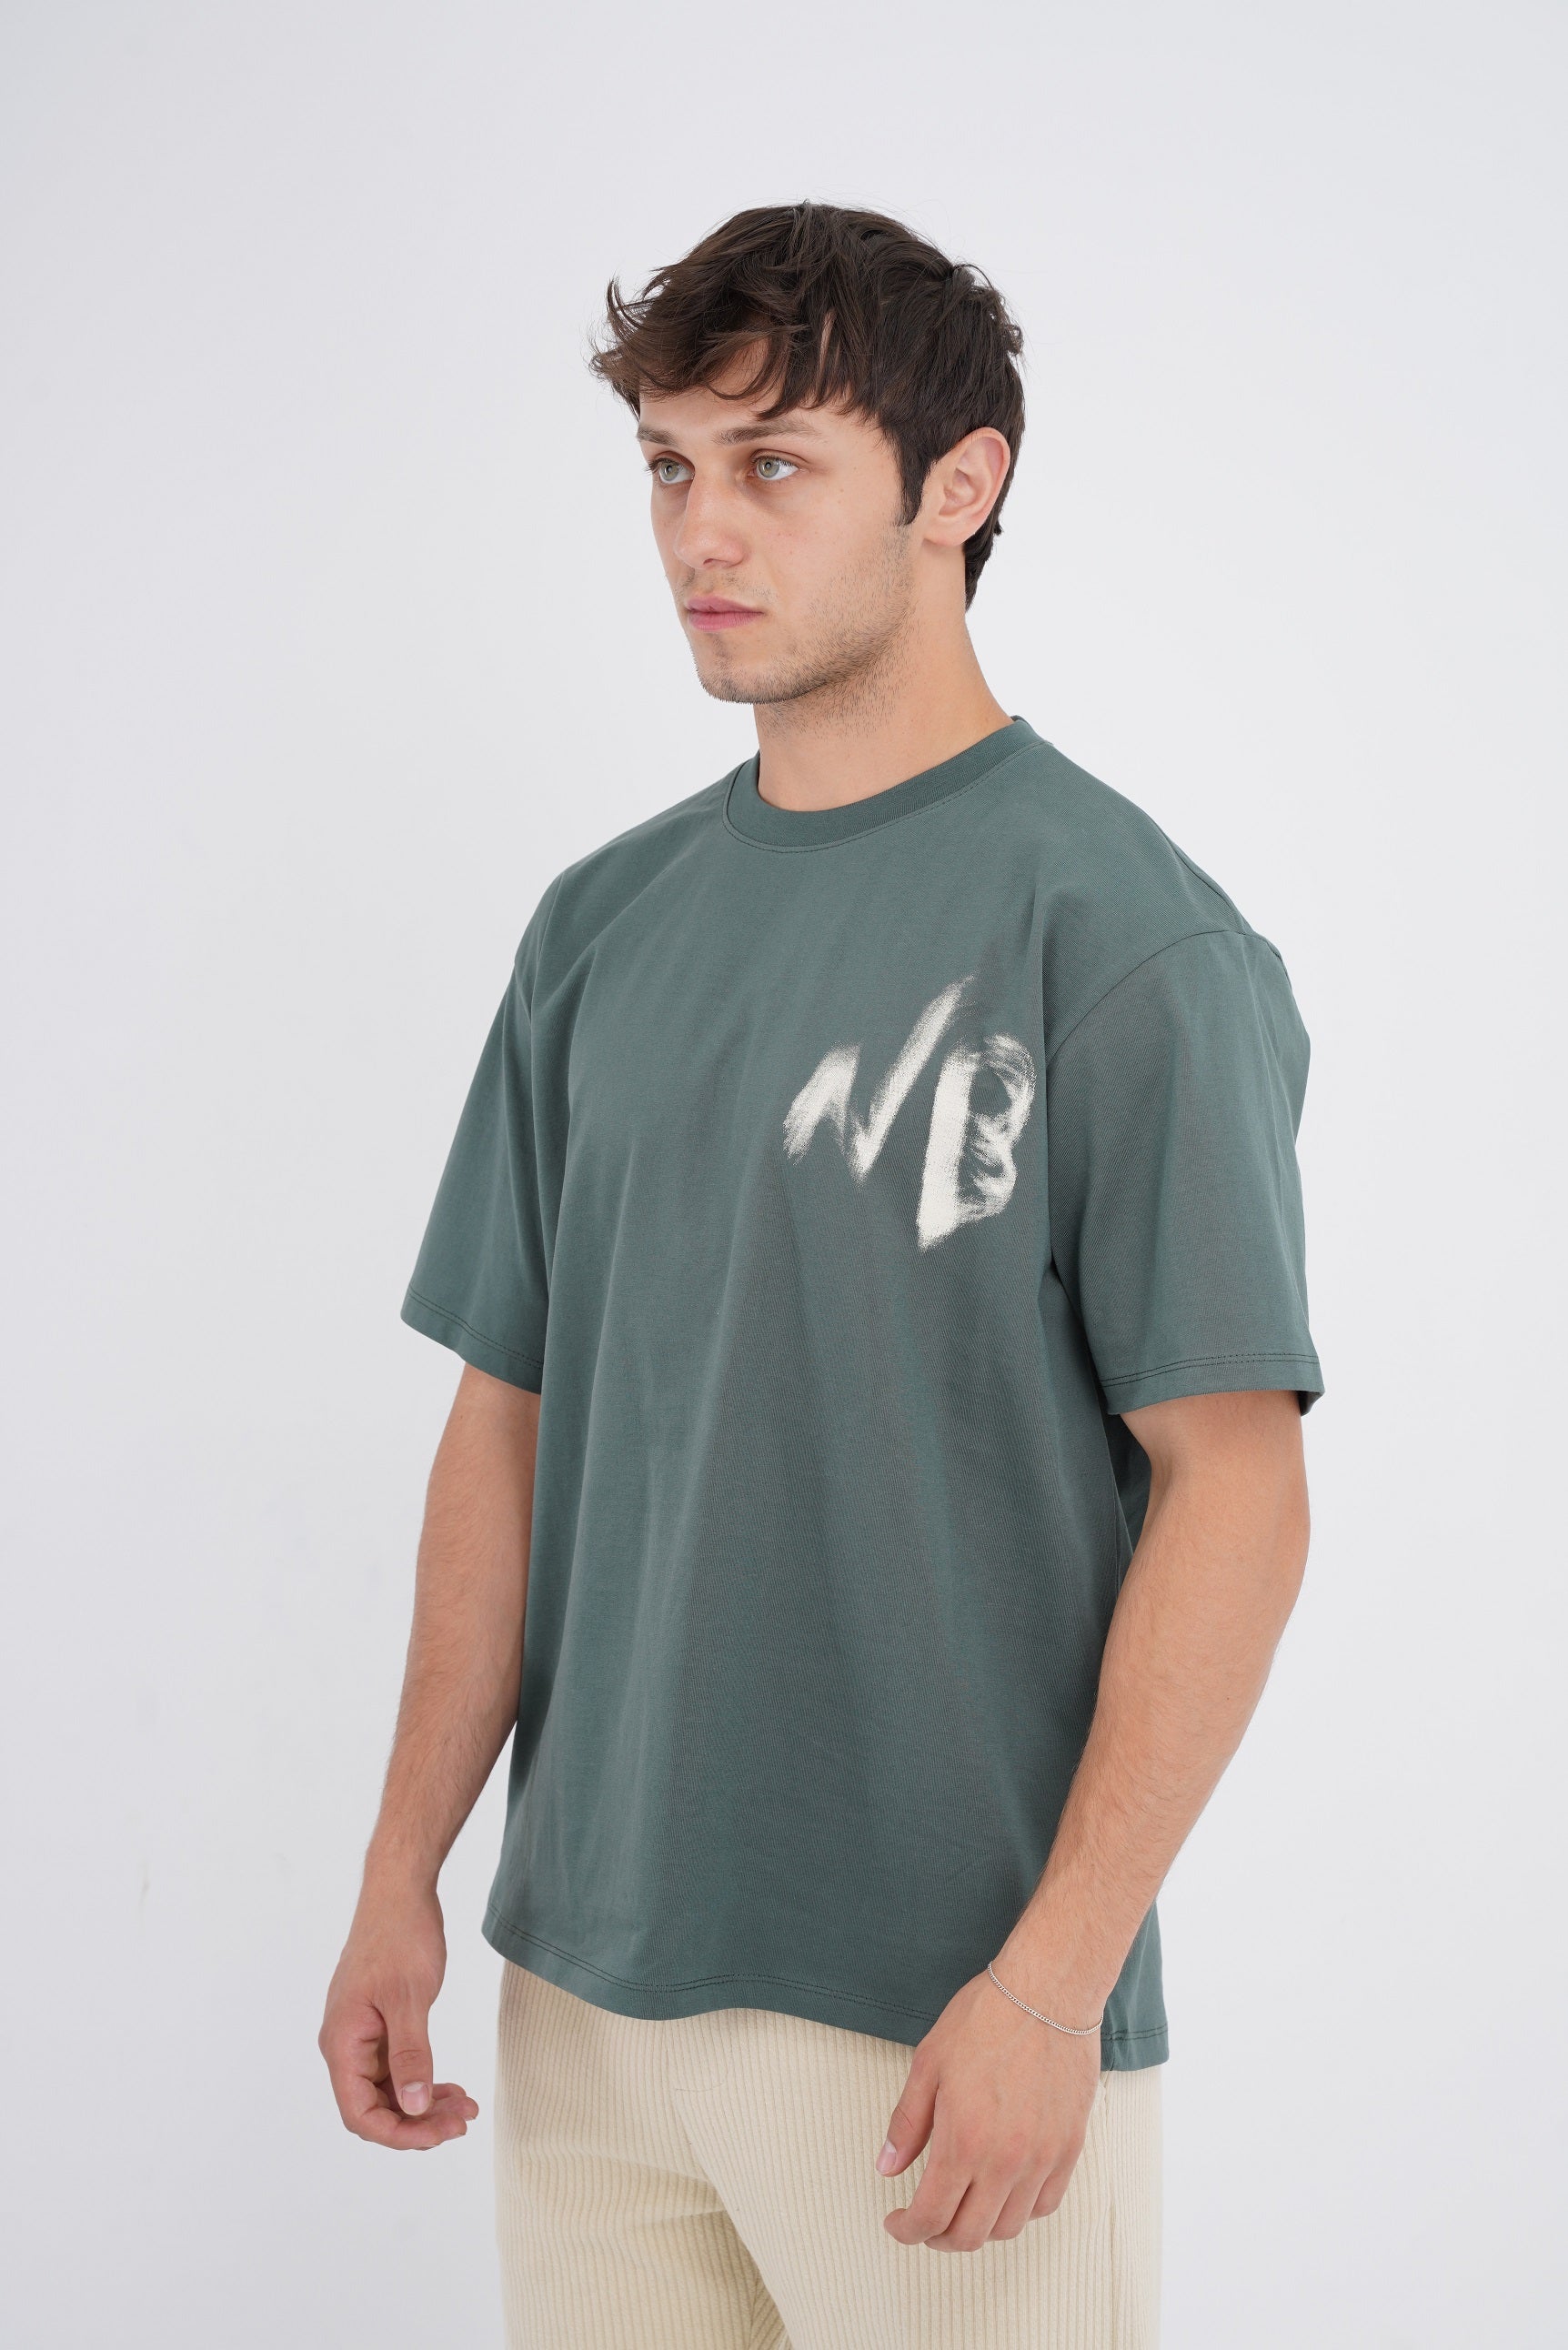 M24TH824 - Oversized Round neck, Printed T-shirt